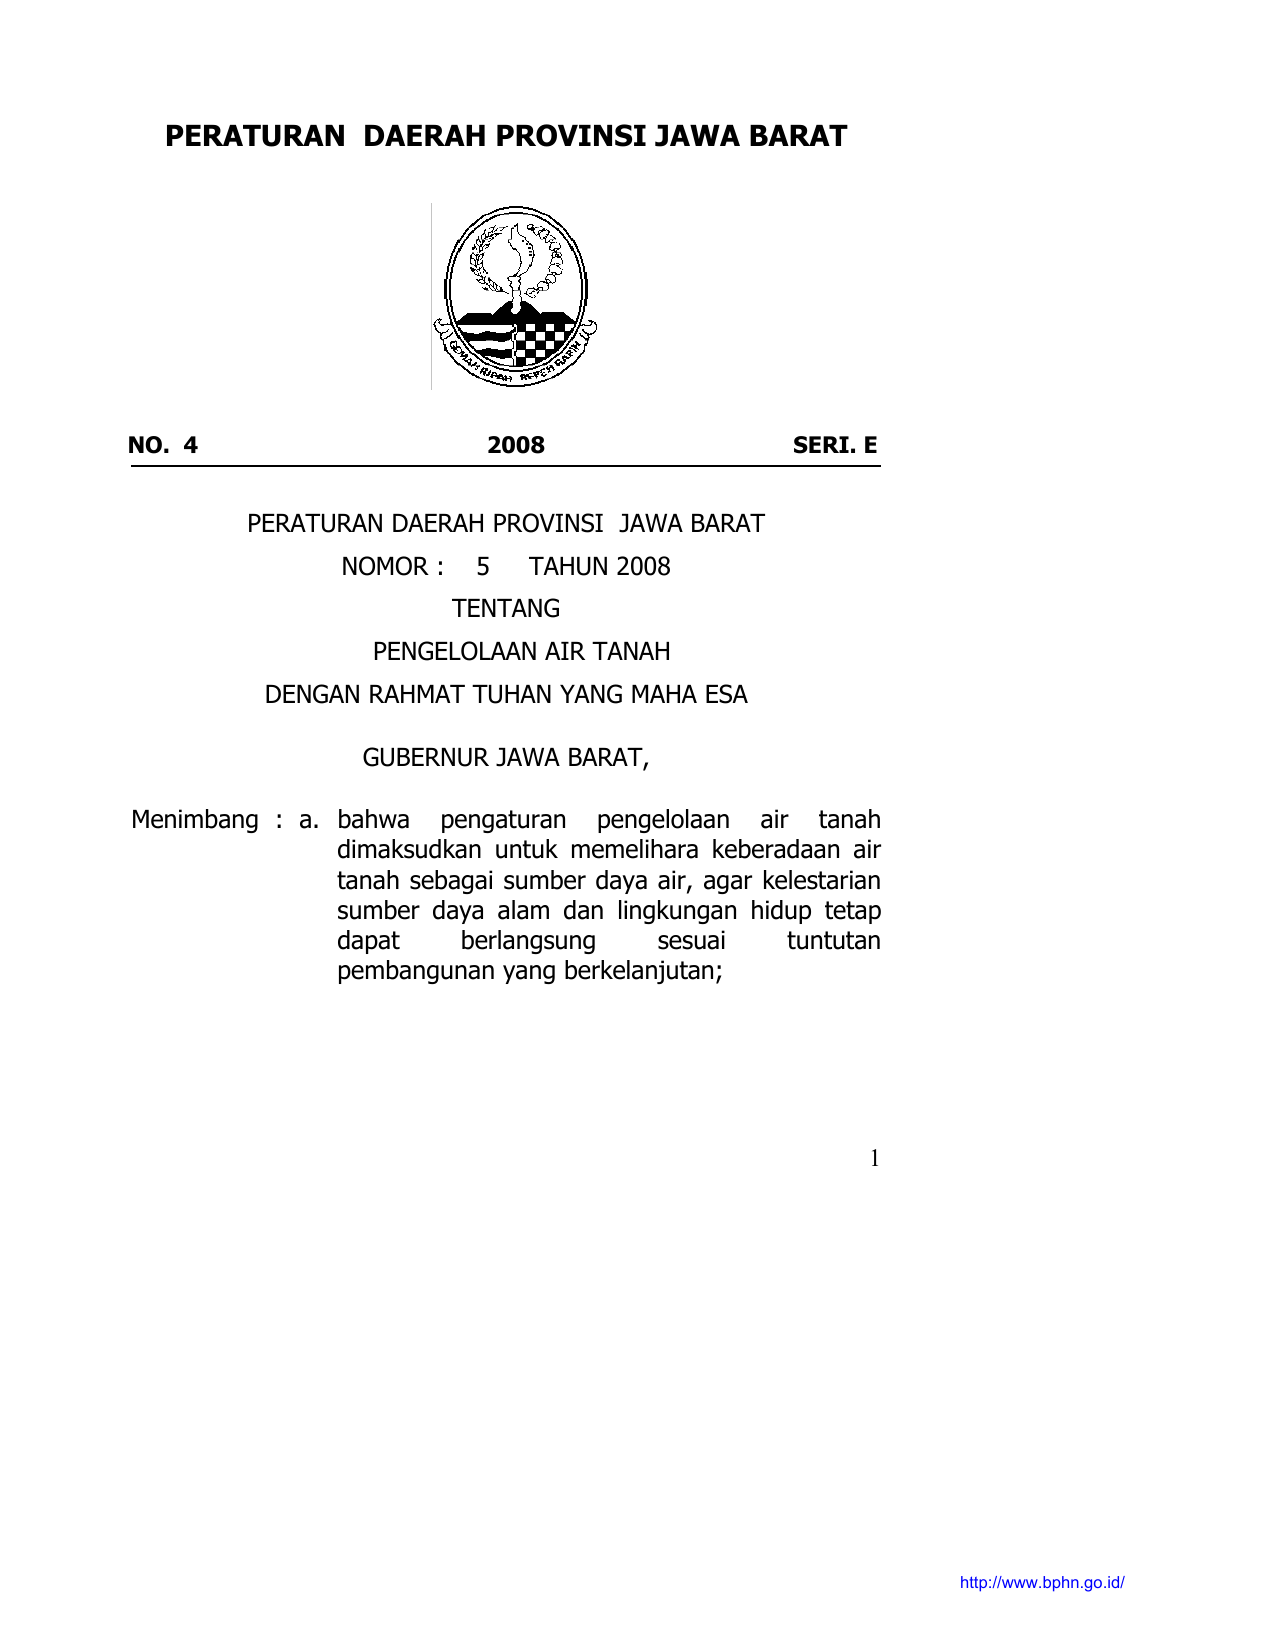 Peraturan Daerah Provinsi Jawa Barat